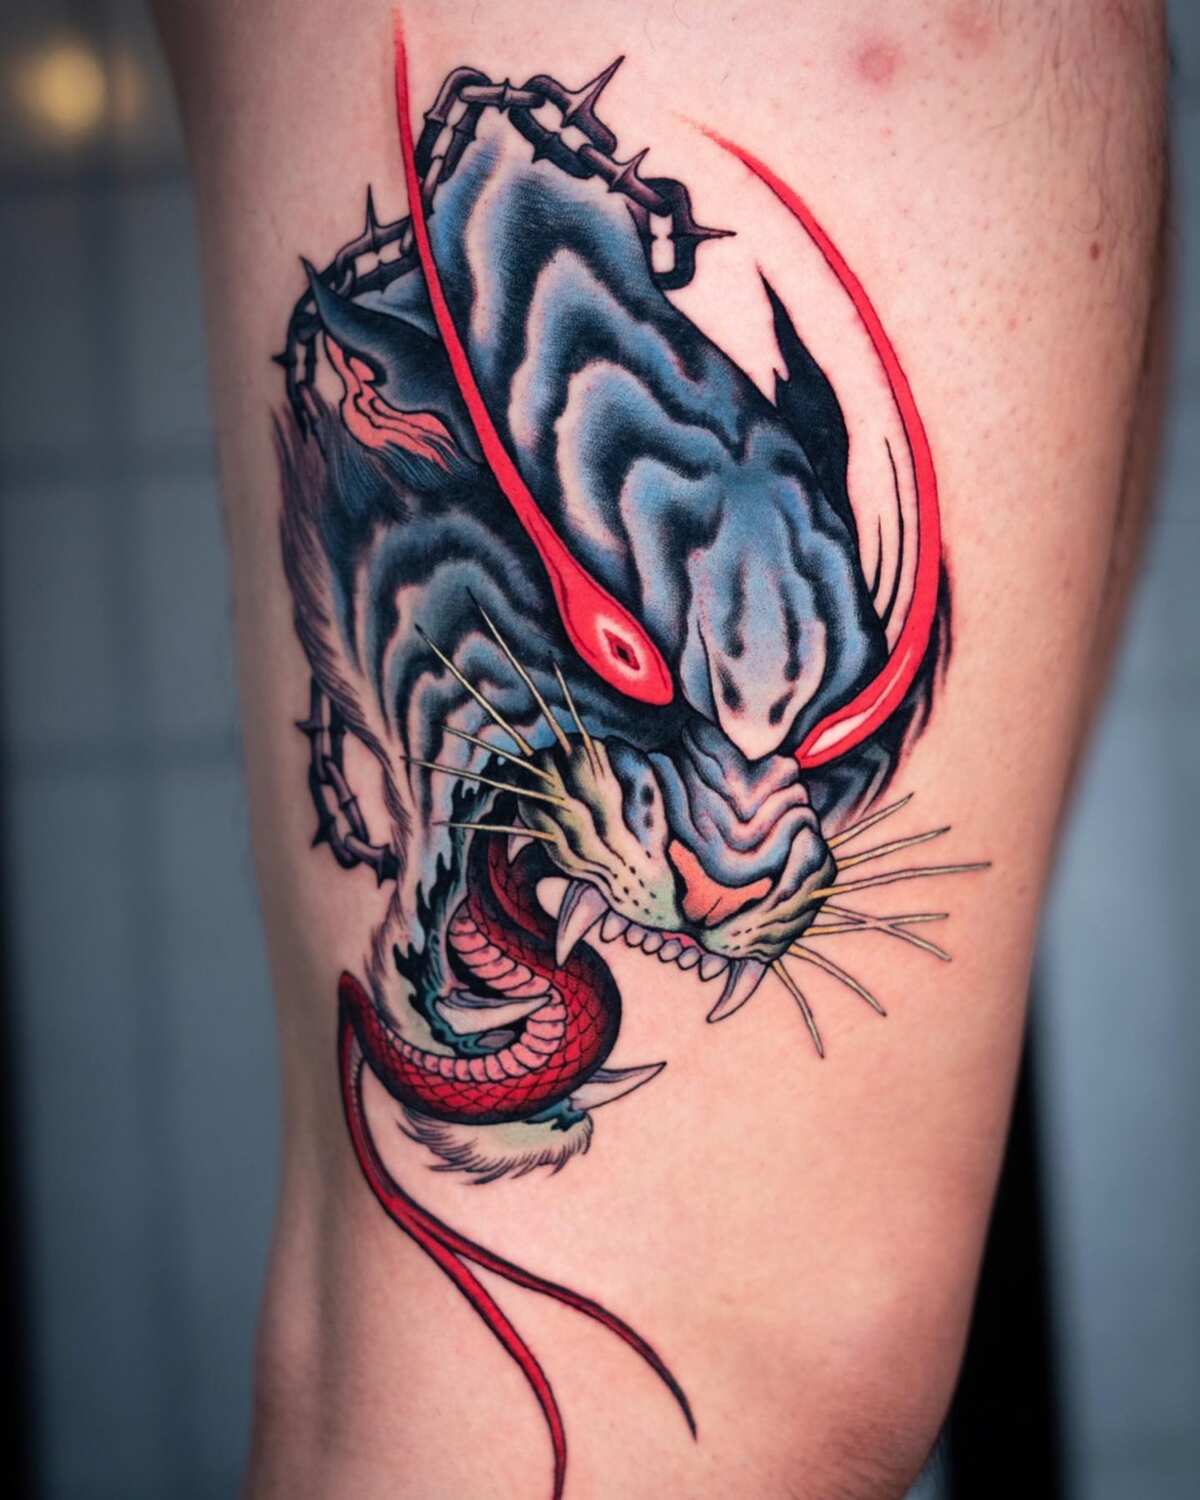 Japanese Samurai Tattoos: Ideas, Designs, and Meanings - TatRing